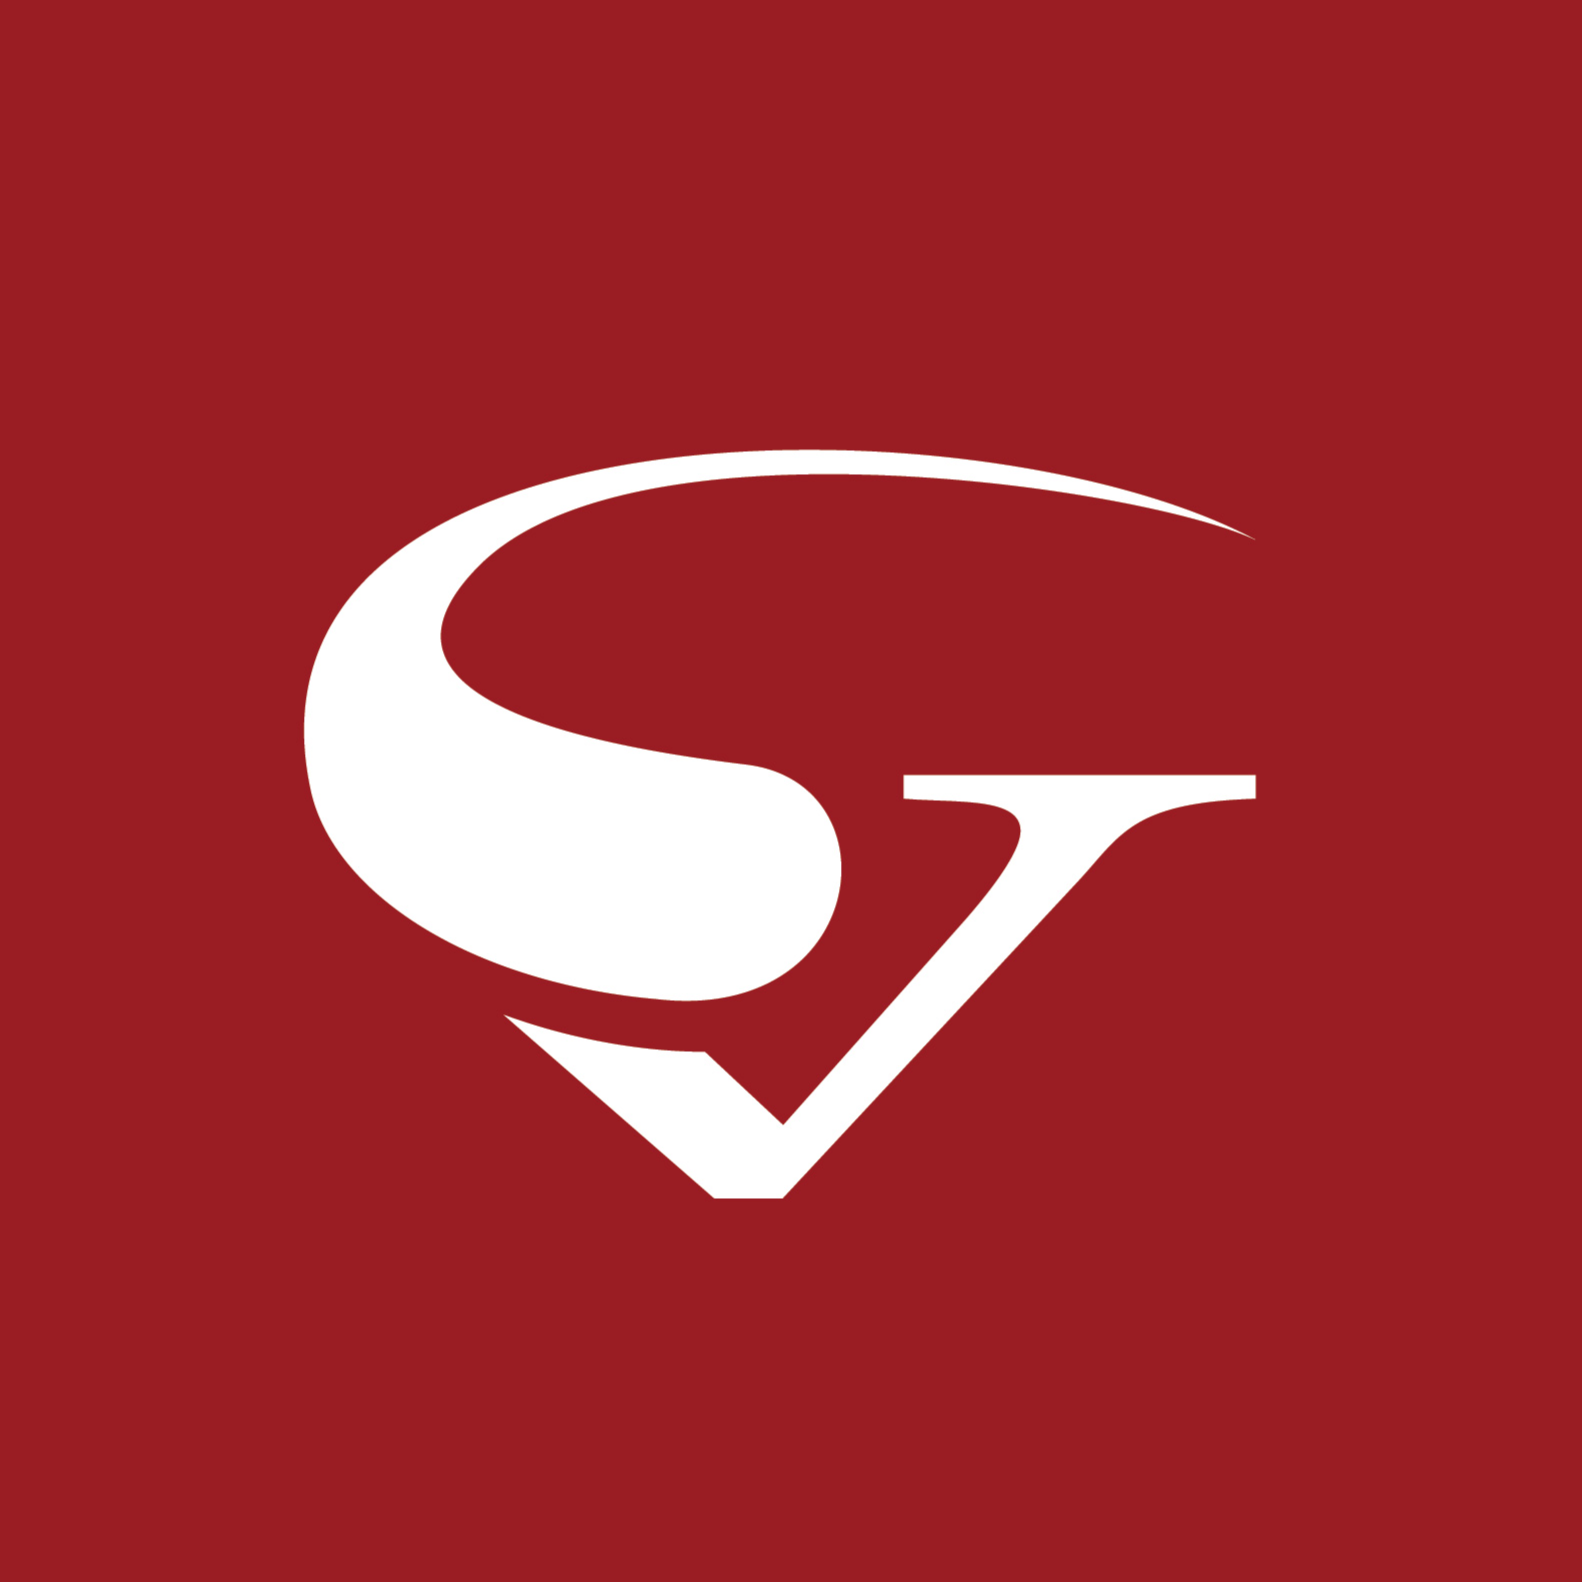 Sanivac Logo